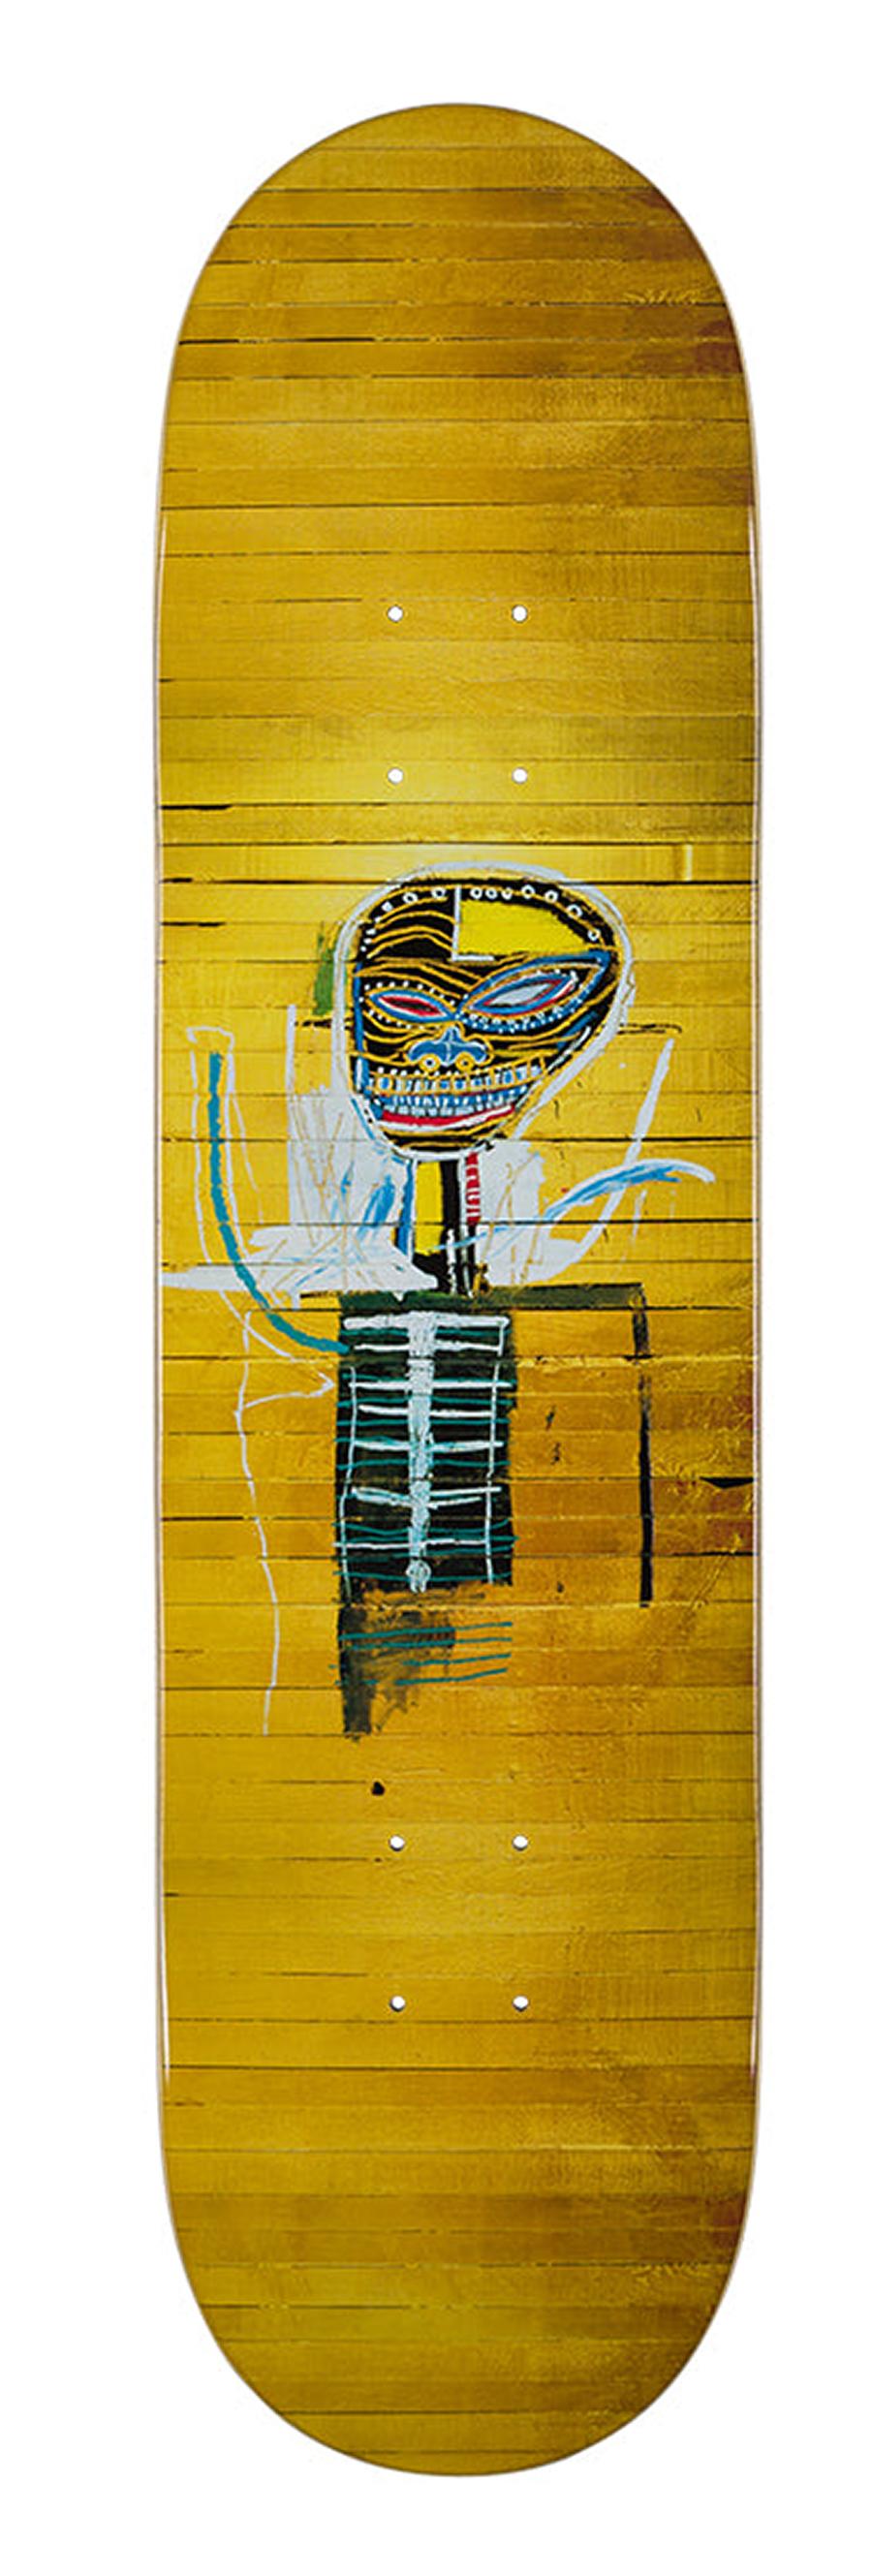 (after) Jean-Michel Basquiat Abstract Print - Basquiat Gold Griot Skateboard Deck (Basquiat skate)